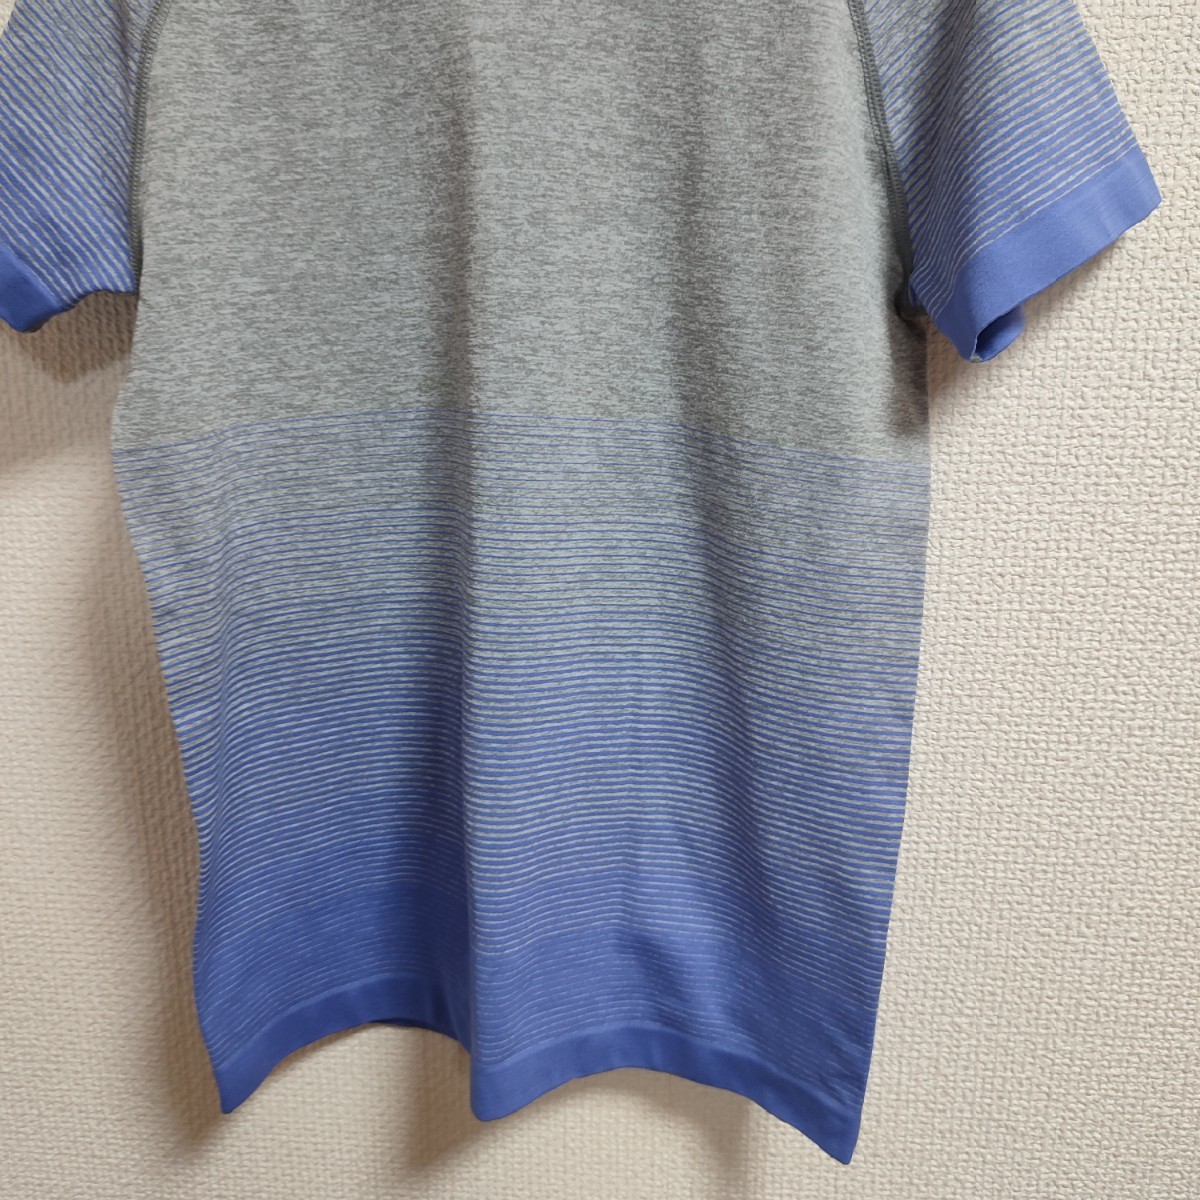 SPORT PRO short sleeves T-shirt gray M size 